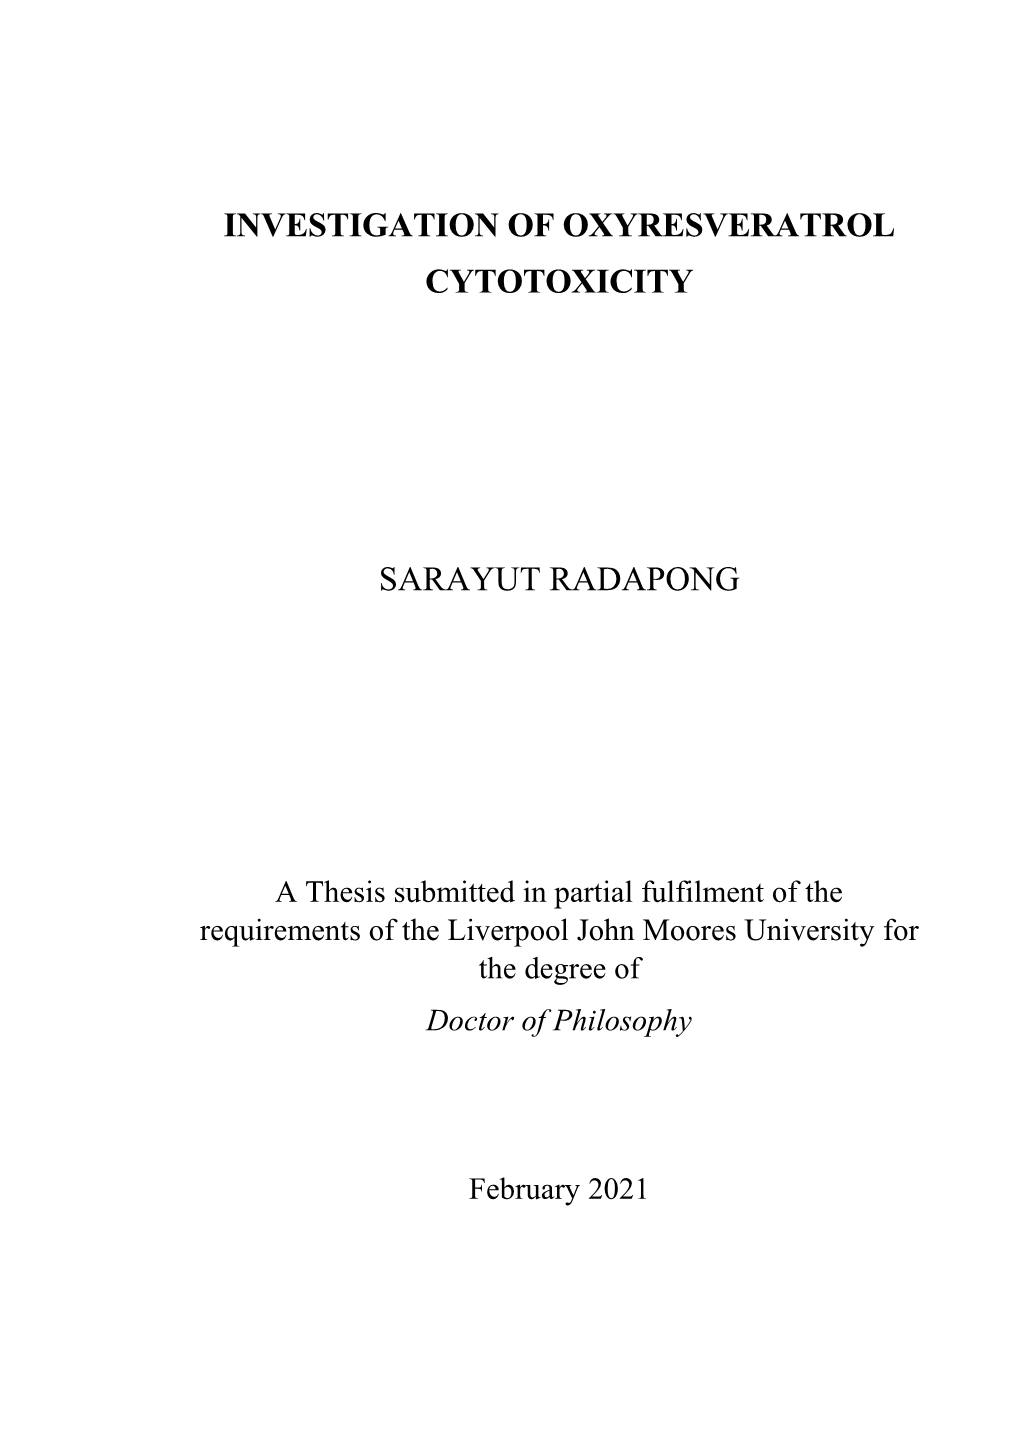 Investigation of Oxyresveratrol Cytotoxicity Sarayut Radapong